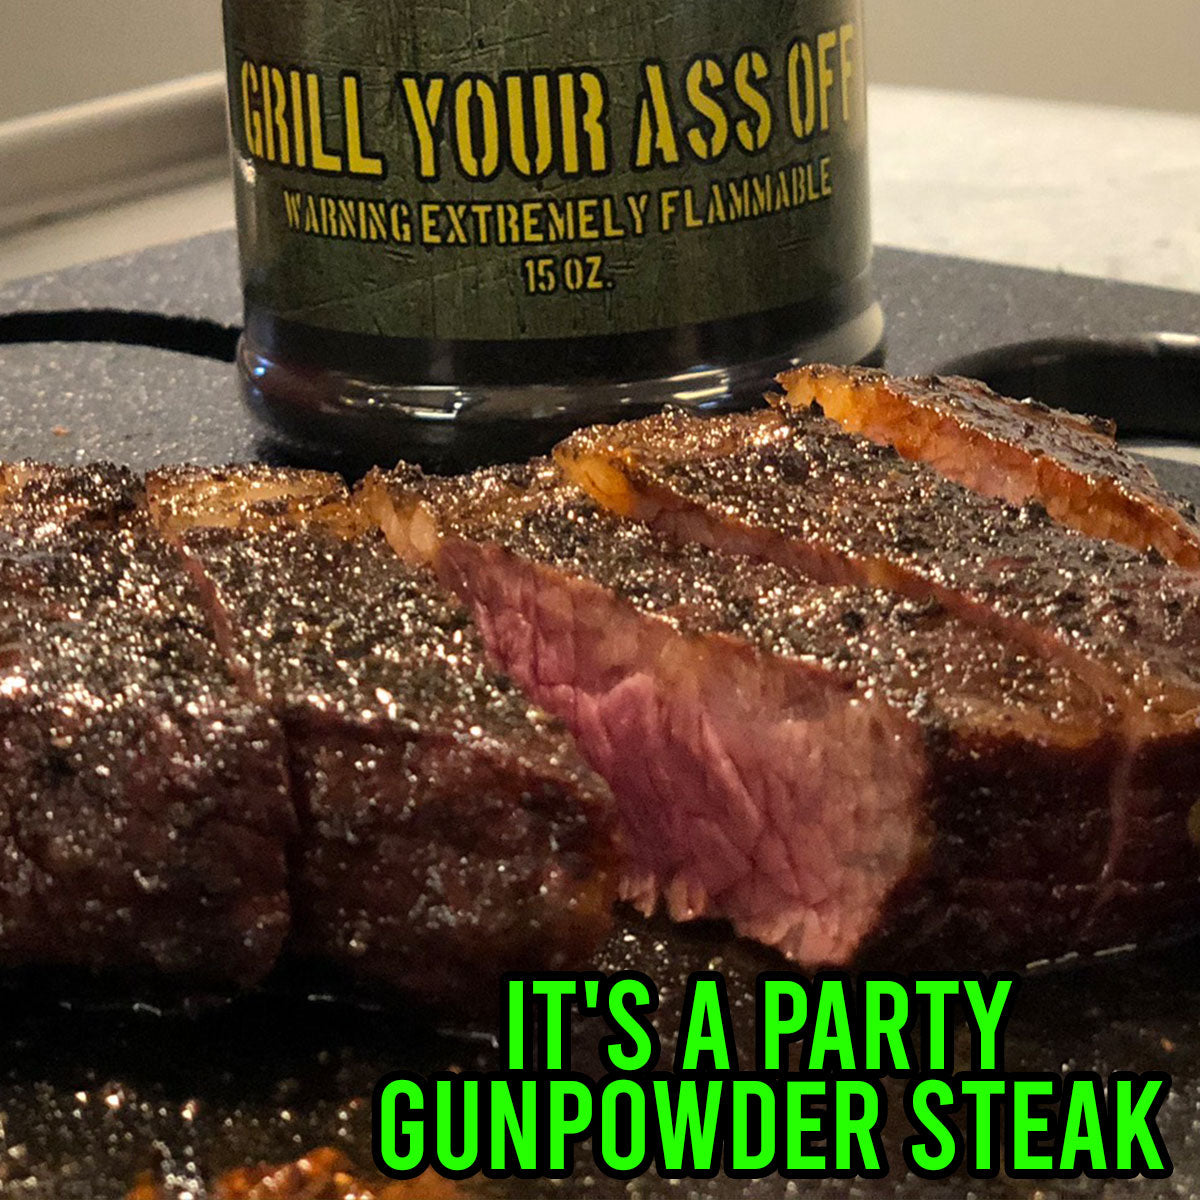 It's A Party Gunpowder Steak | Grill Your Ass Off